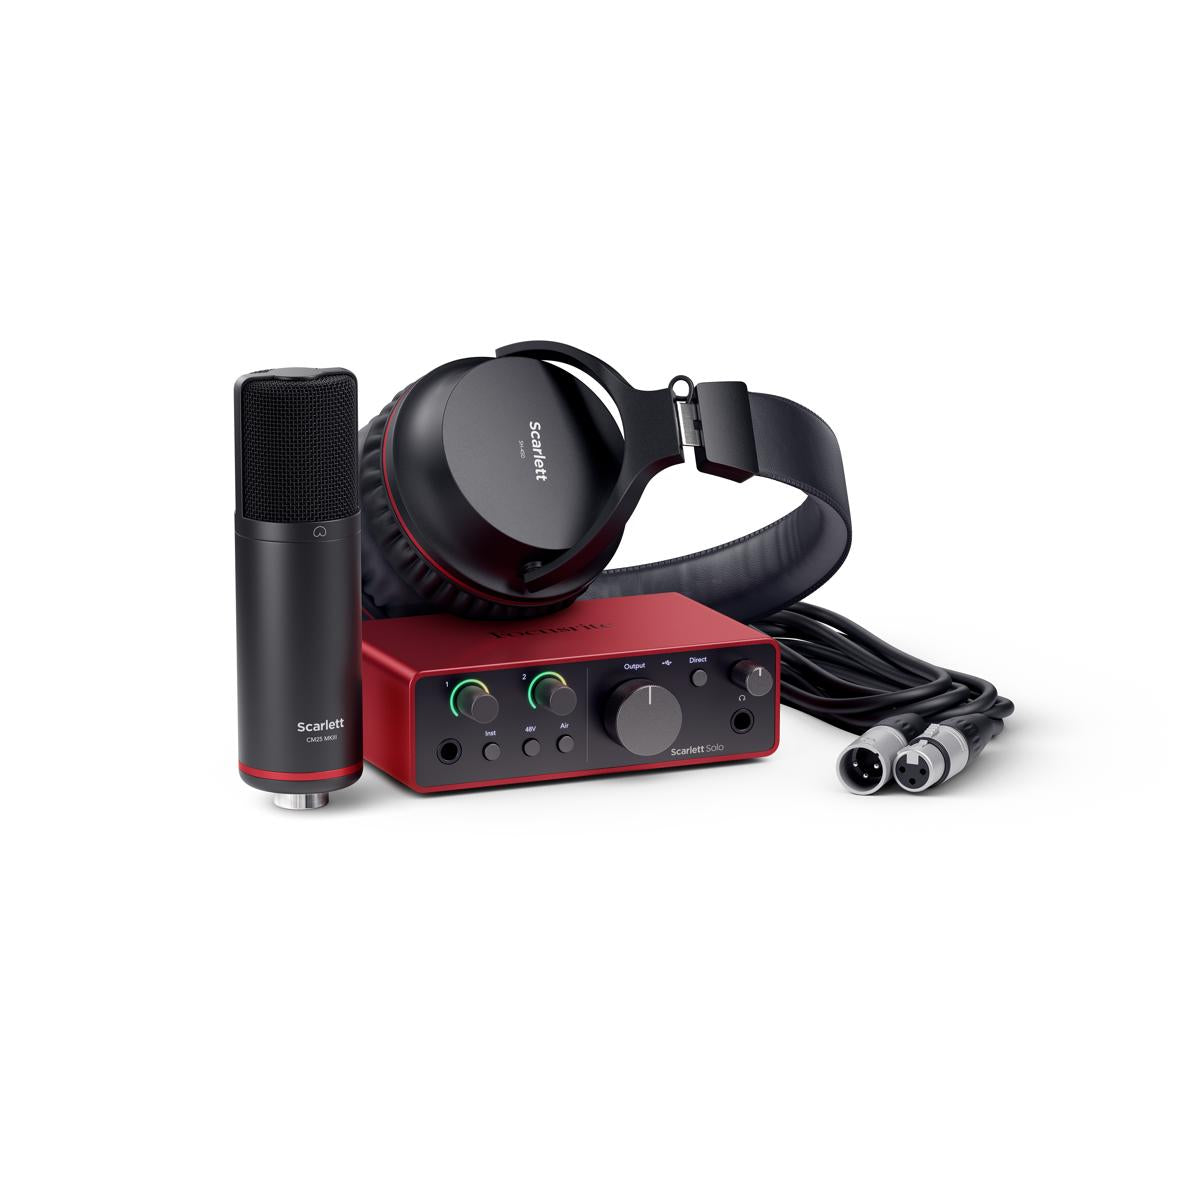 Focusrite Scarlett Solo Studio USB Audio Interface (Generation 4) 2-in/2-out w/ Mic & Headphones